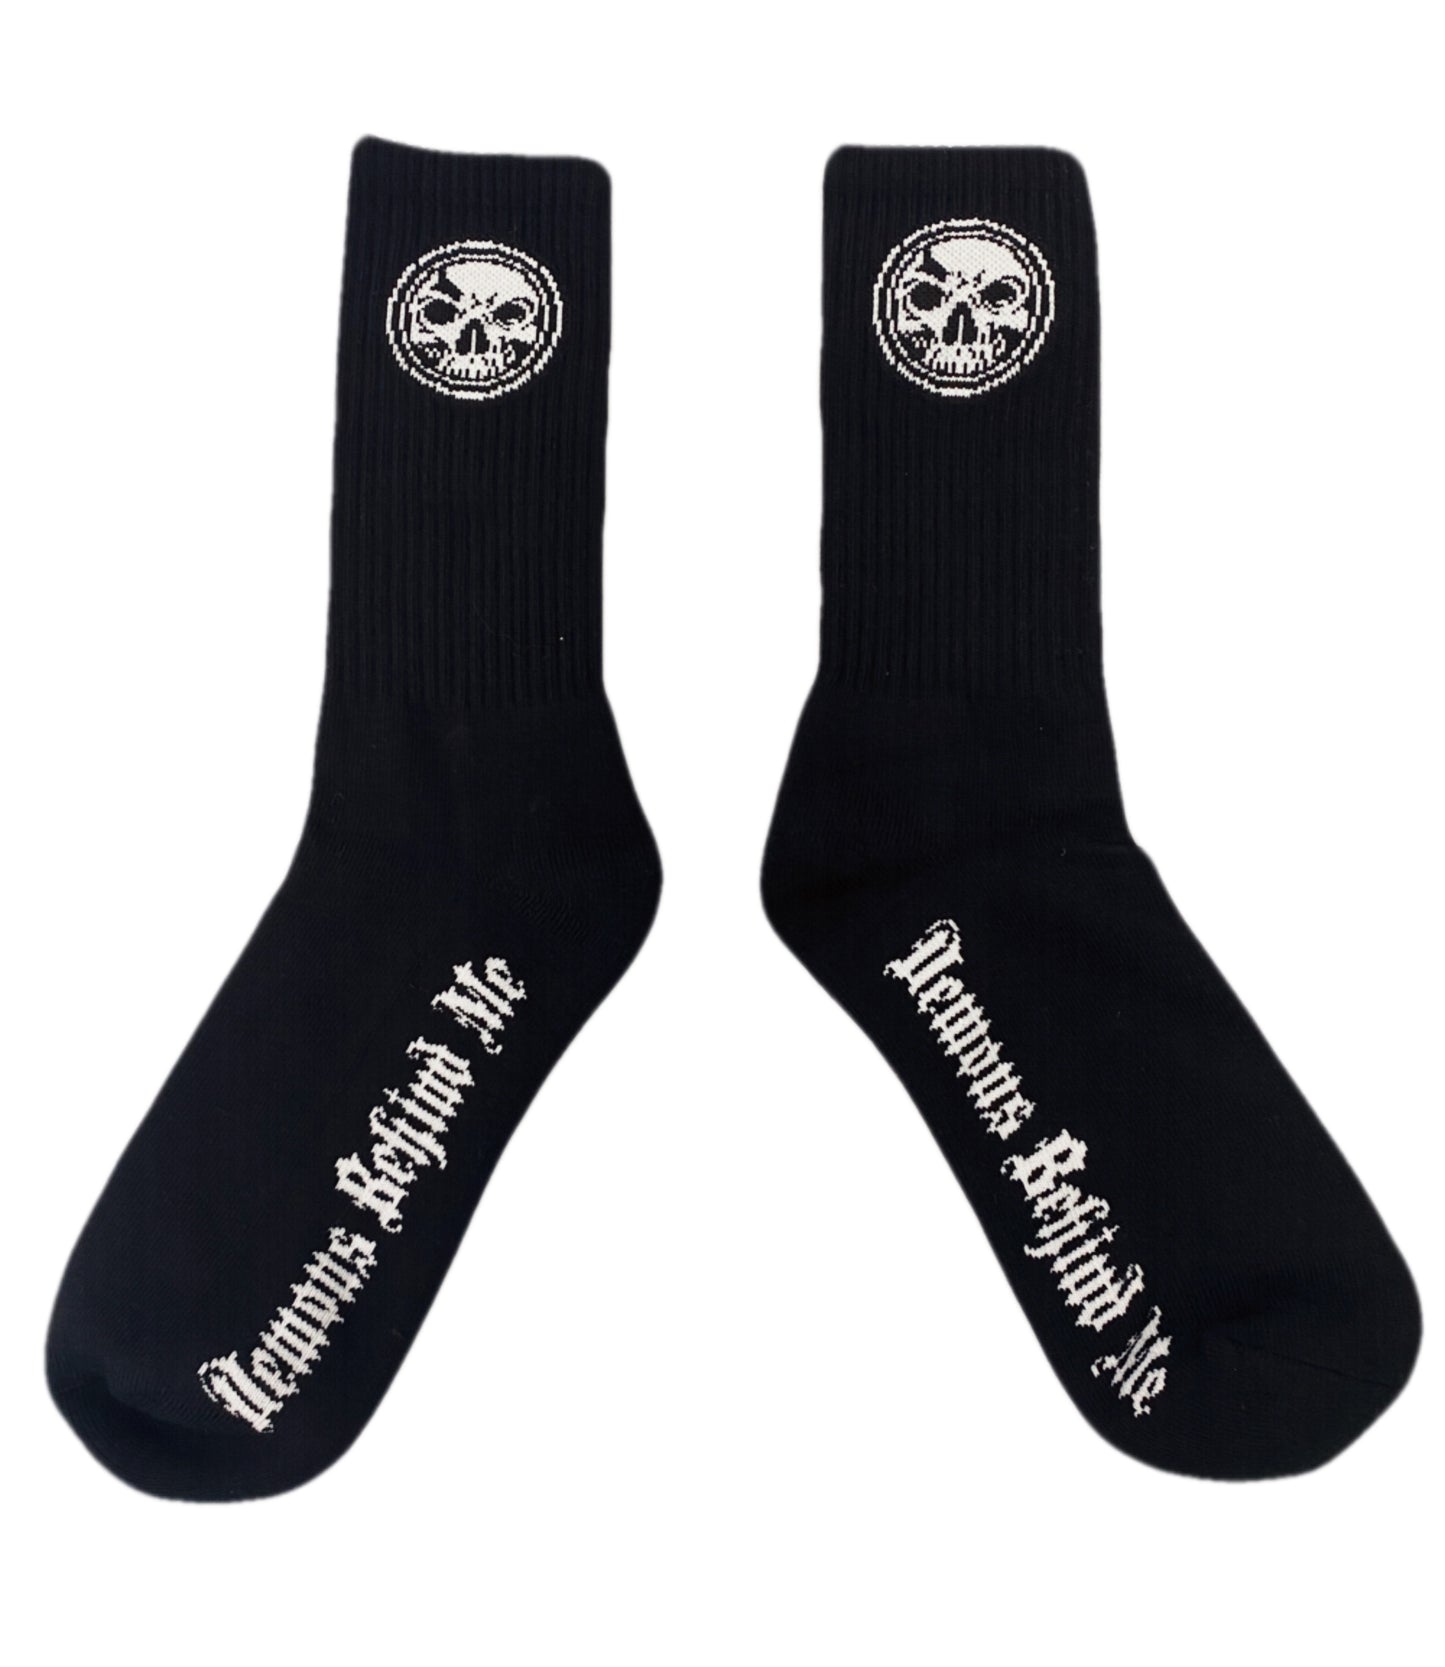 NEW!  High Performance Athletic Socks (Pair) - Black